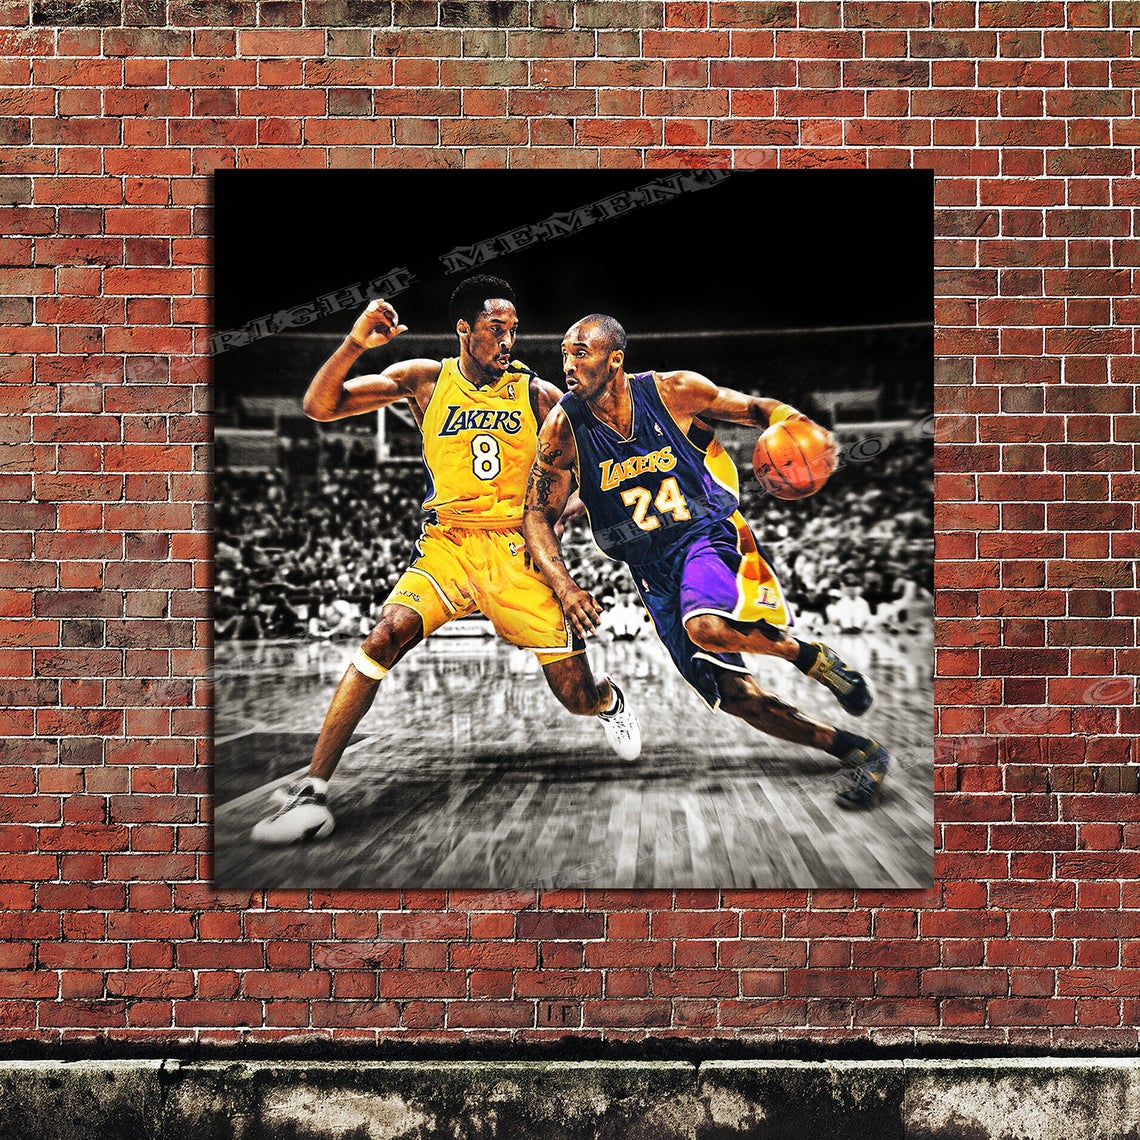 Lakers Basketball Player 24 Wall Mural